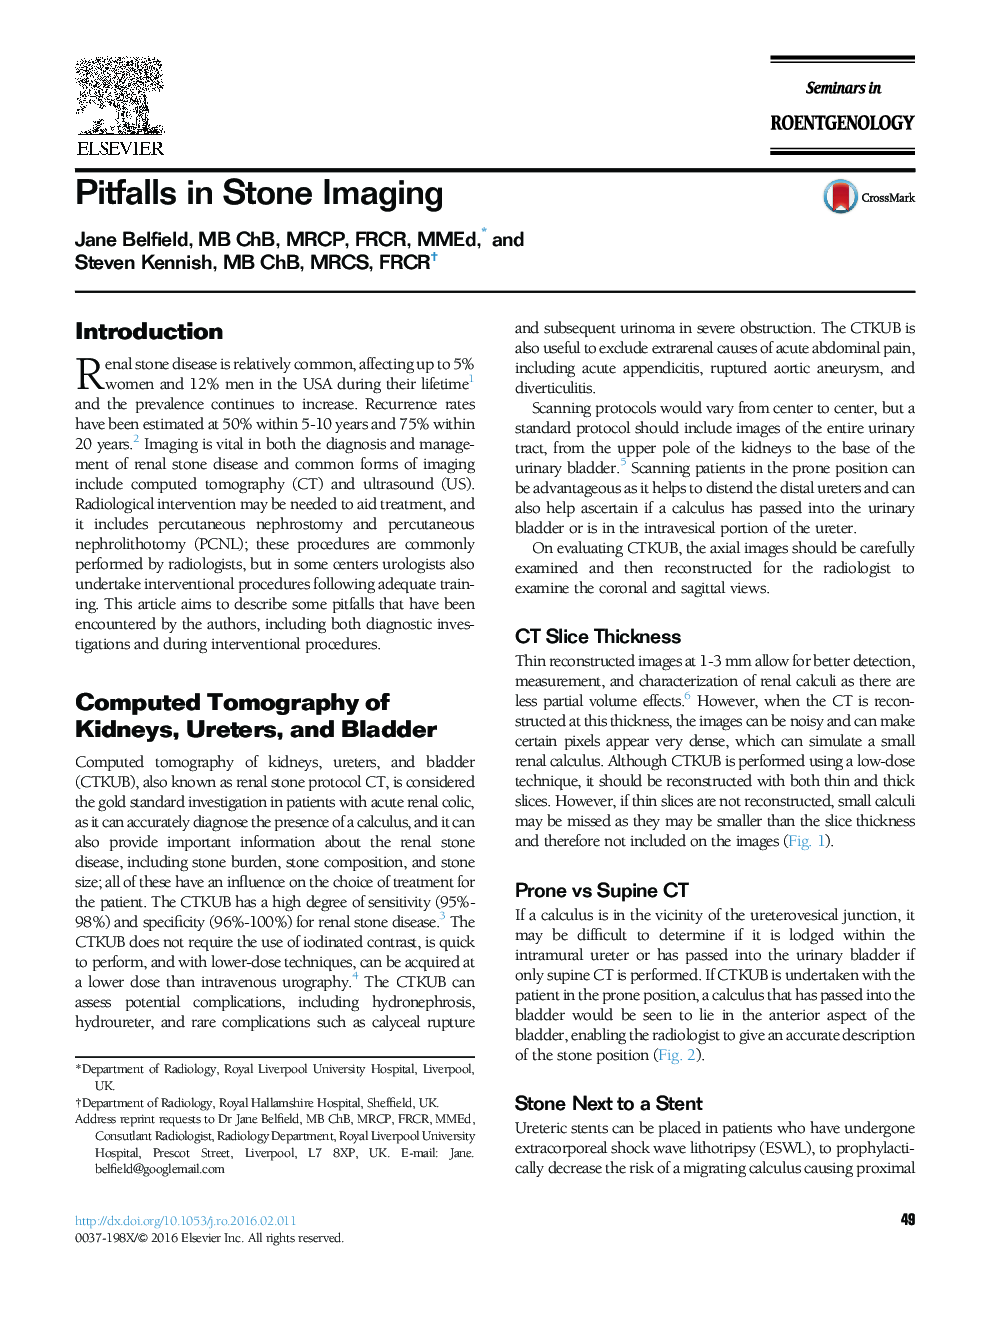 Pitfalls in Stone Imaging